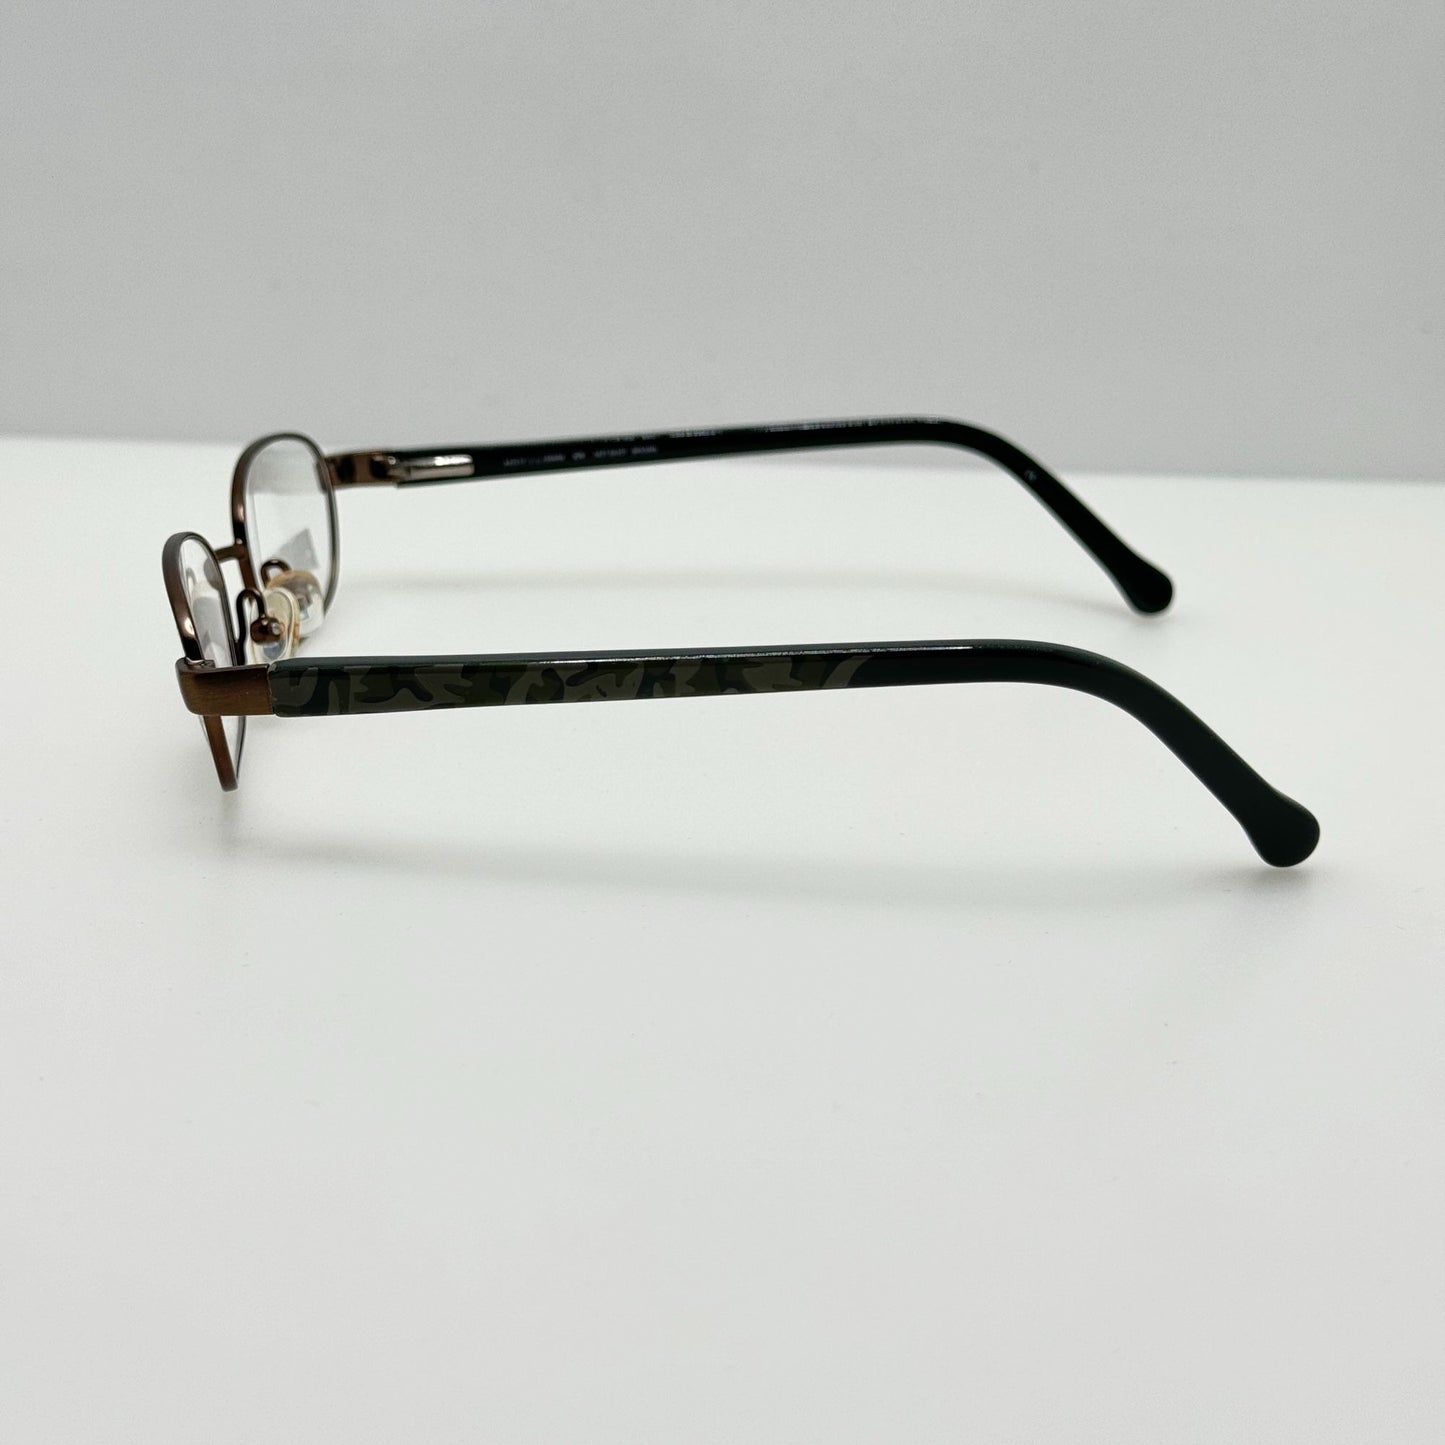 Dilli Dalli Eyeglasses Eye Glasses Frames Hot Shot Brown 44-17-125